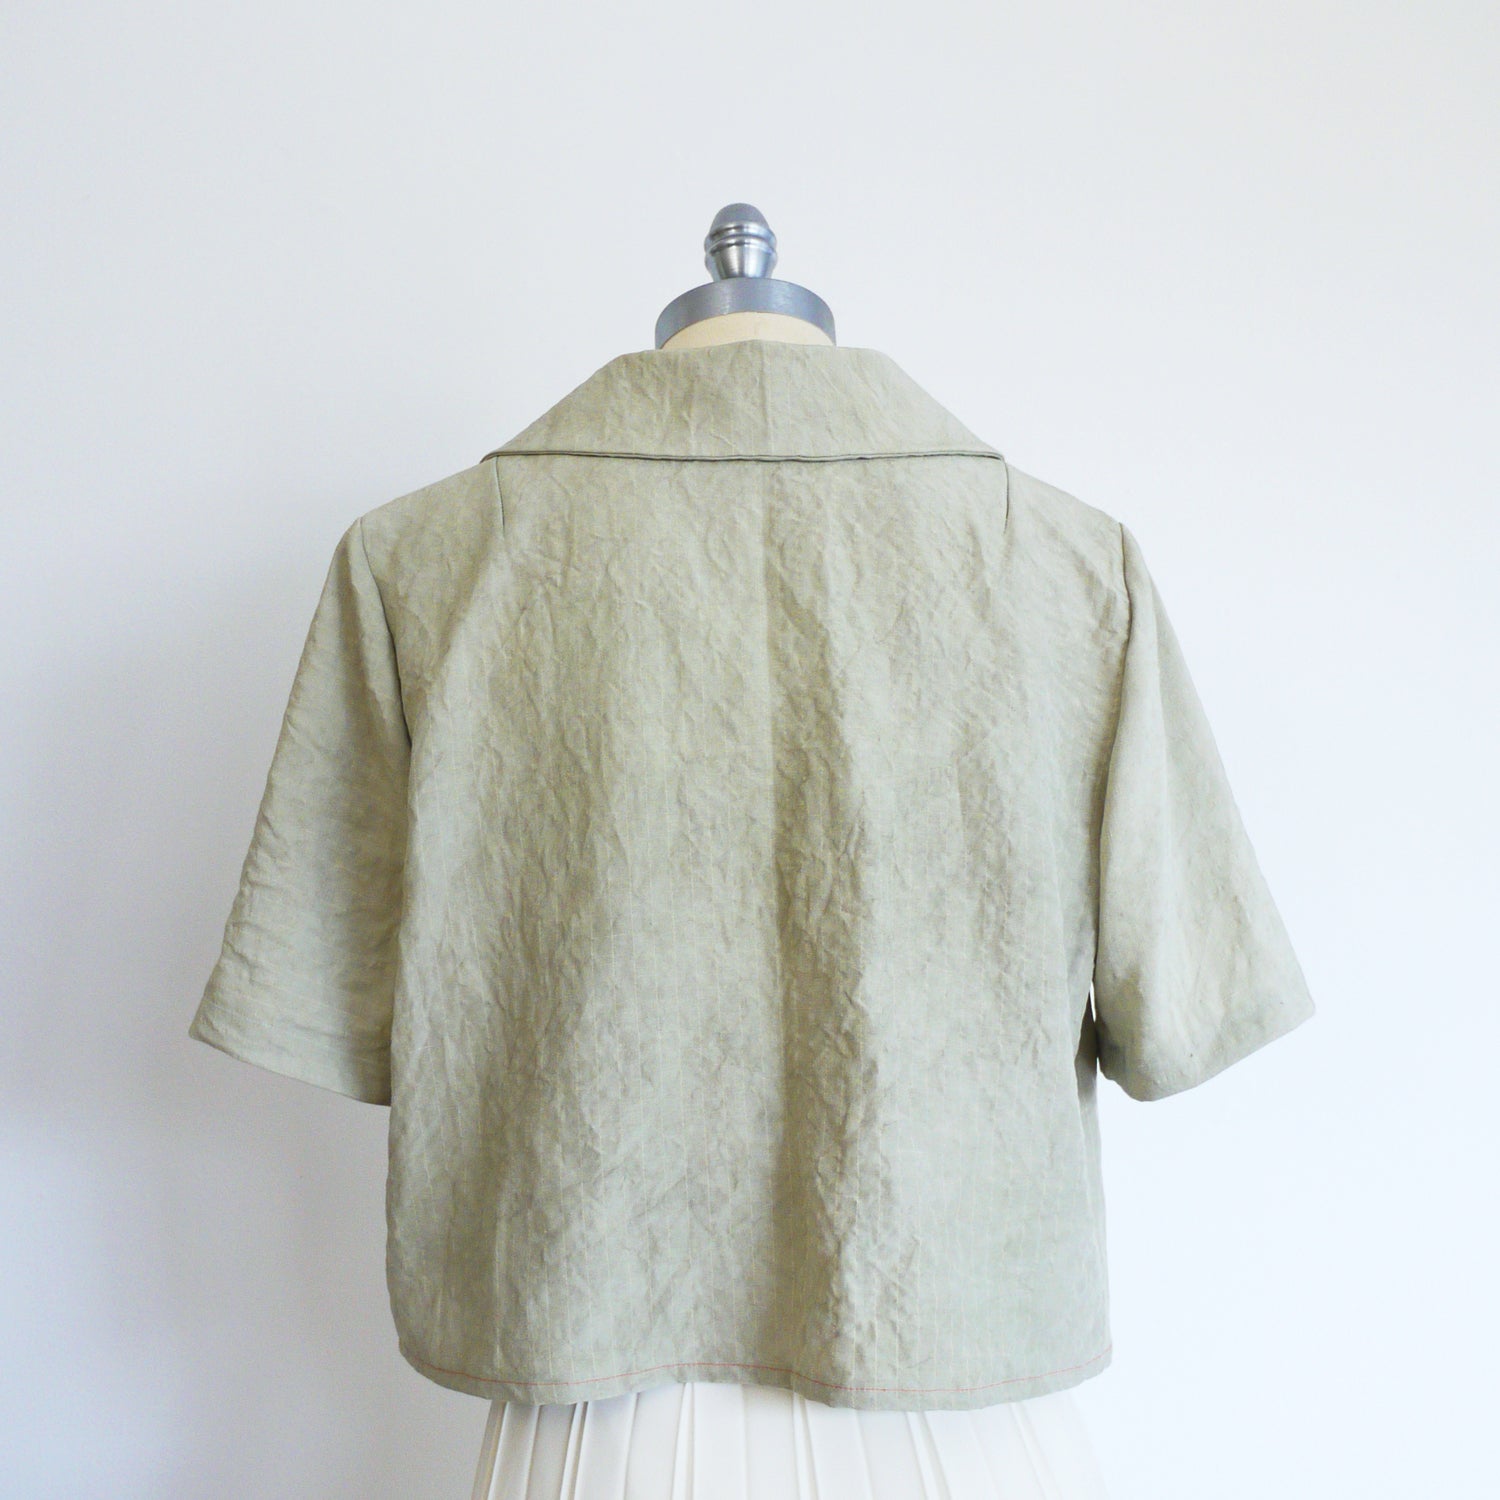 Celadon. Mugwort plant dye silk blouse in gray sage color.  Peter Pan collar cropped blouse